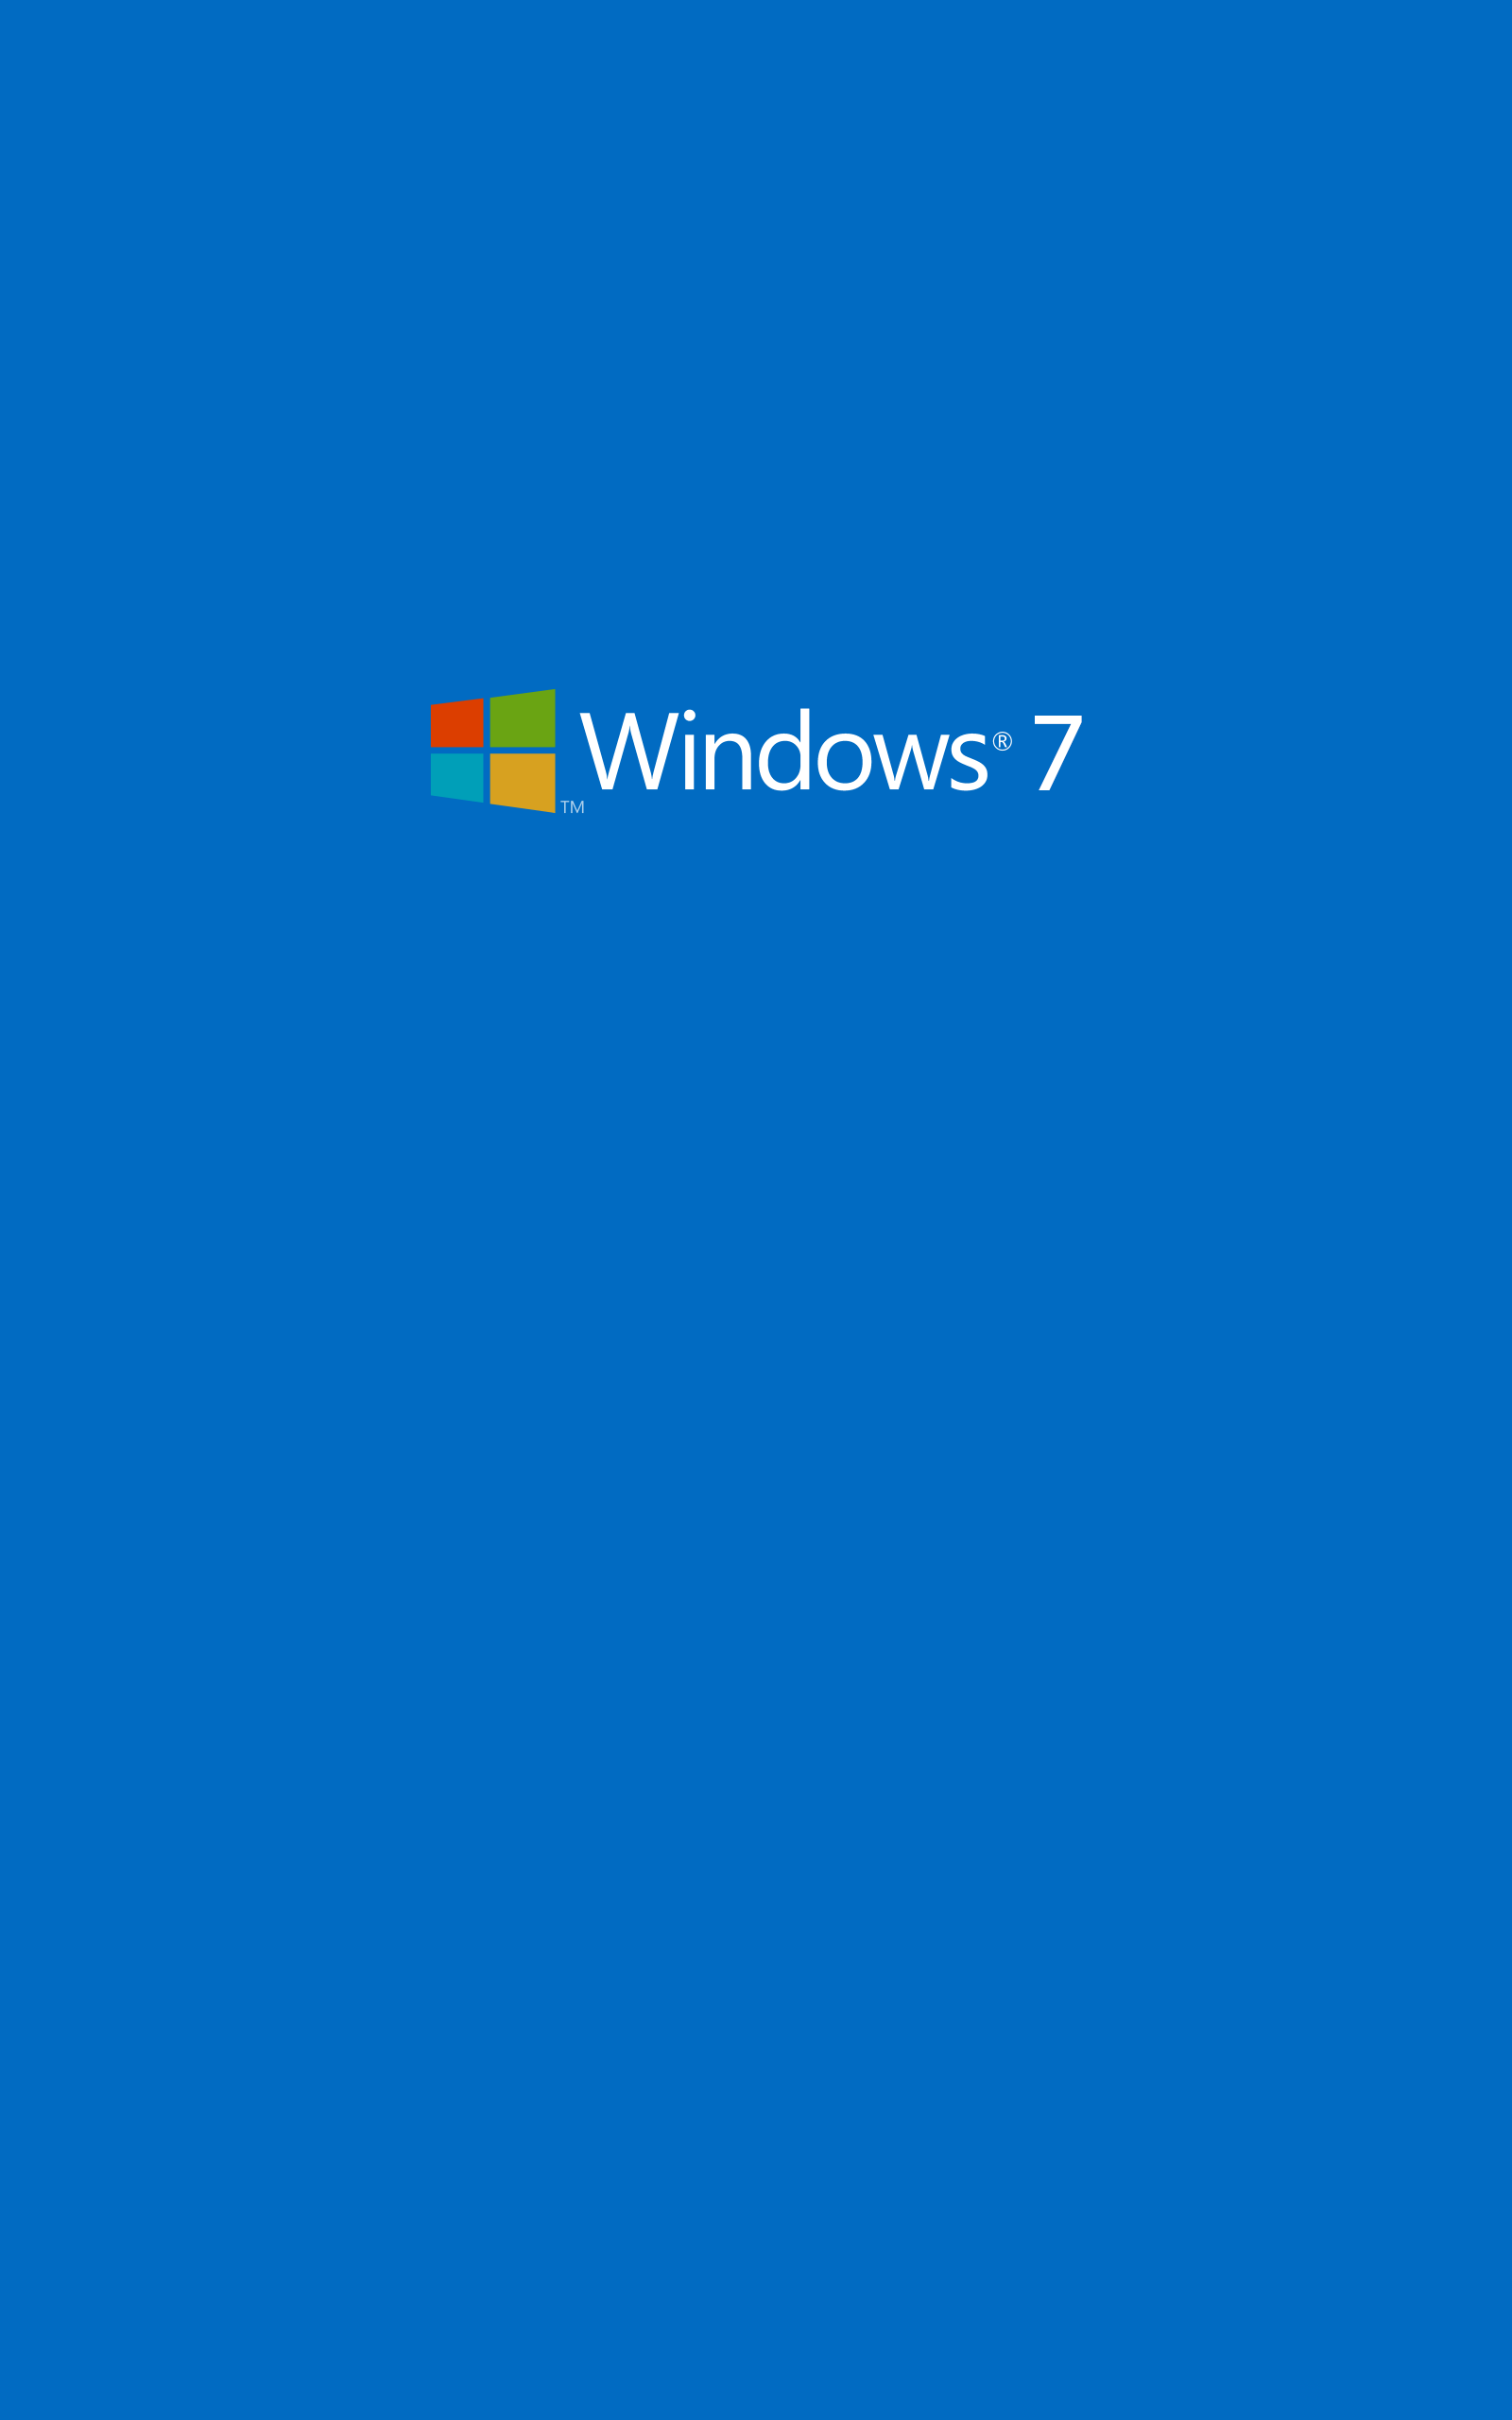 General 1600x2560 Windows 7 Microsoft Windows operating system minimalism simple background logo portrait display blue background